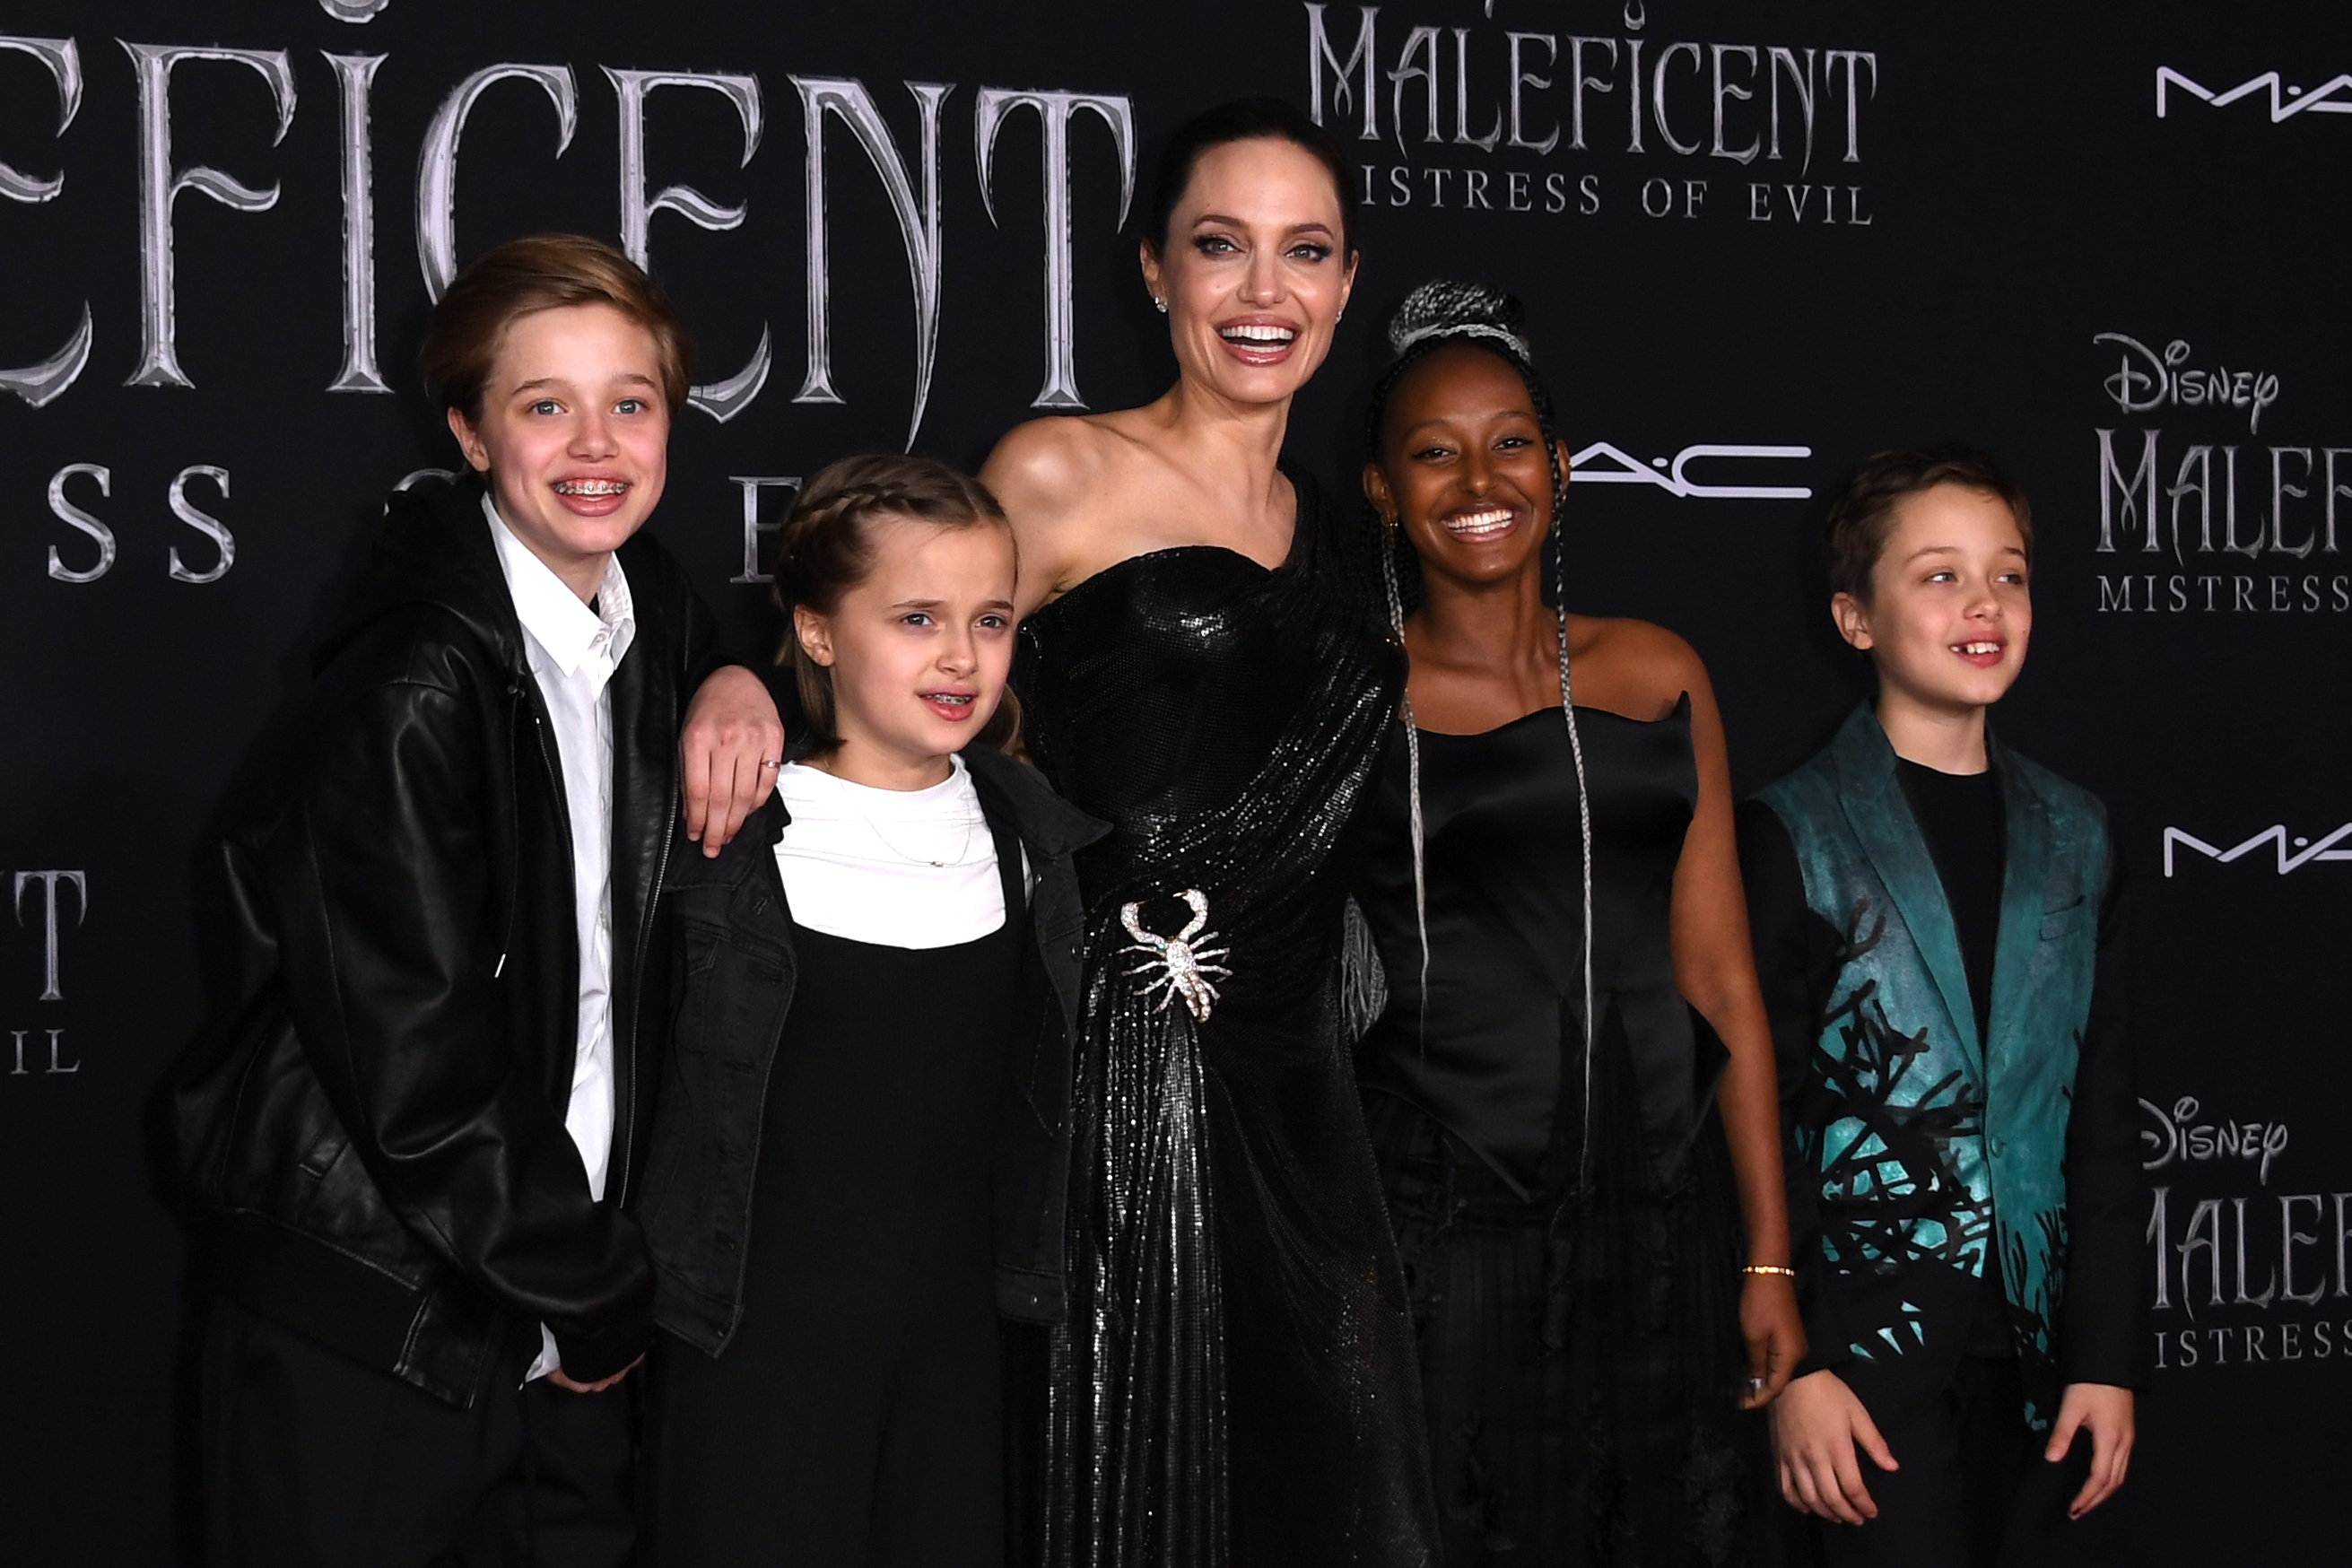 Shiloh Jolie-Pitt, Vivienne Jolie-Pitt, Zahara Jolie-Pitt, and Knox Jolie-Pitt arrive for the world premiere of Disney's "Maleficent: Mistress of Evil" in Hollywood on September 30, 2019 | Source: Getty Images